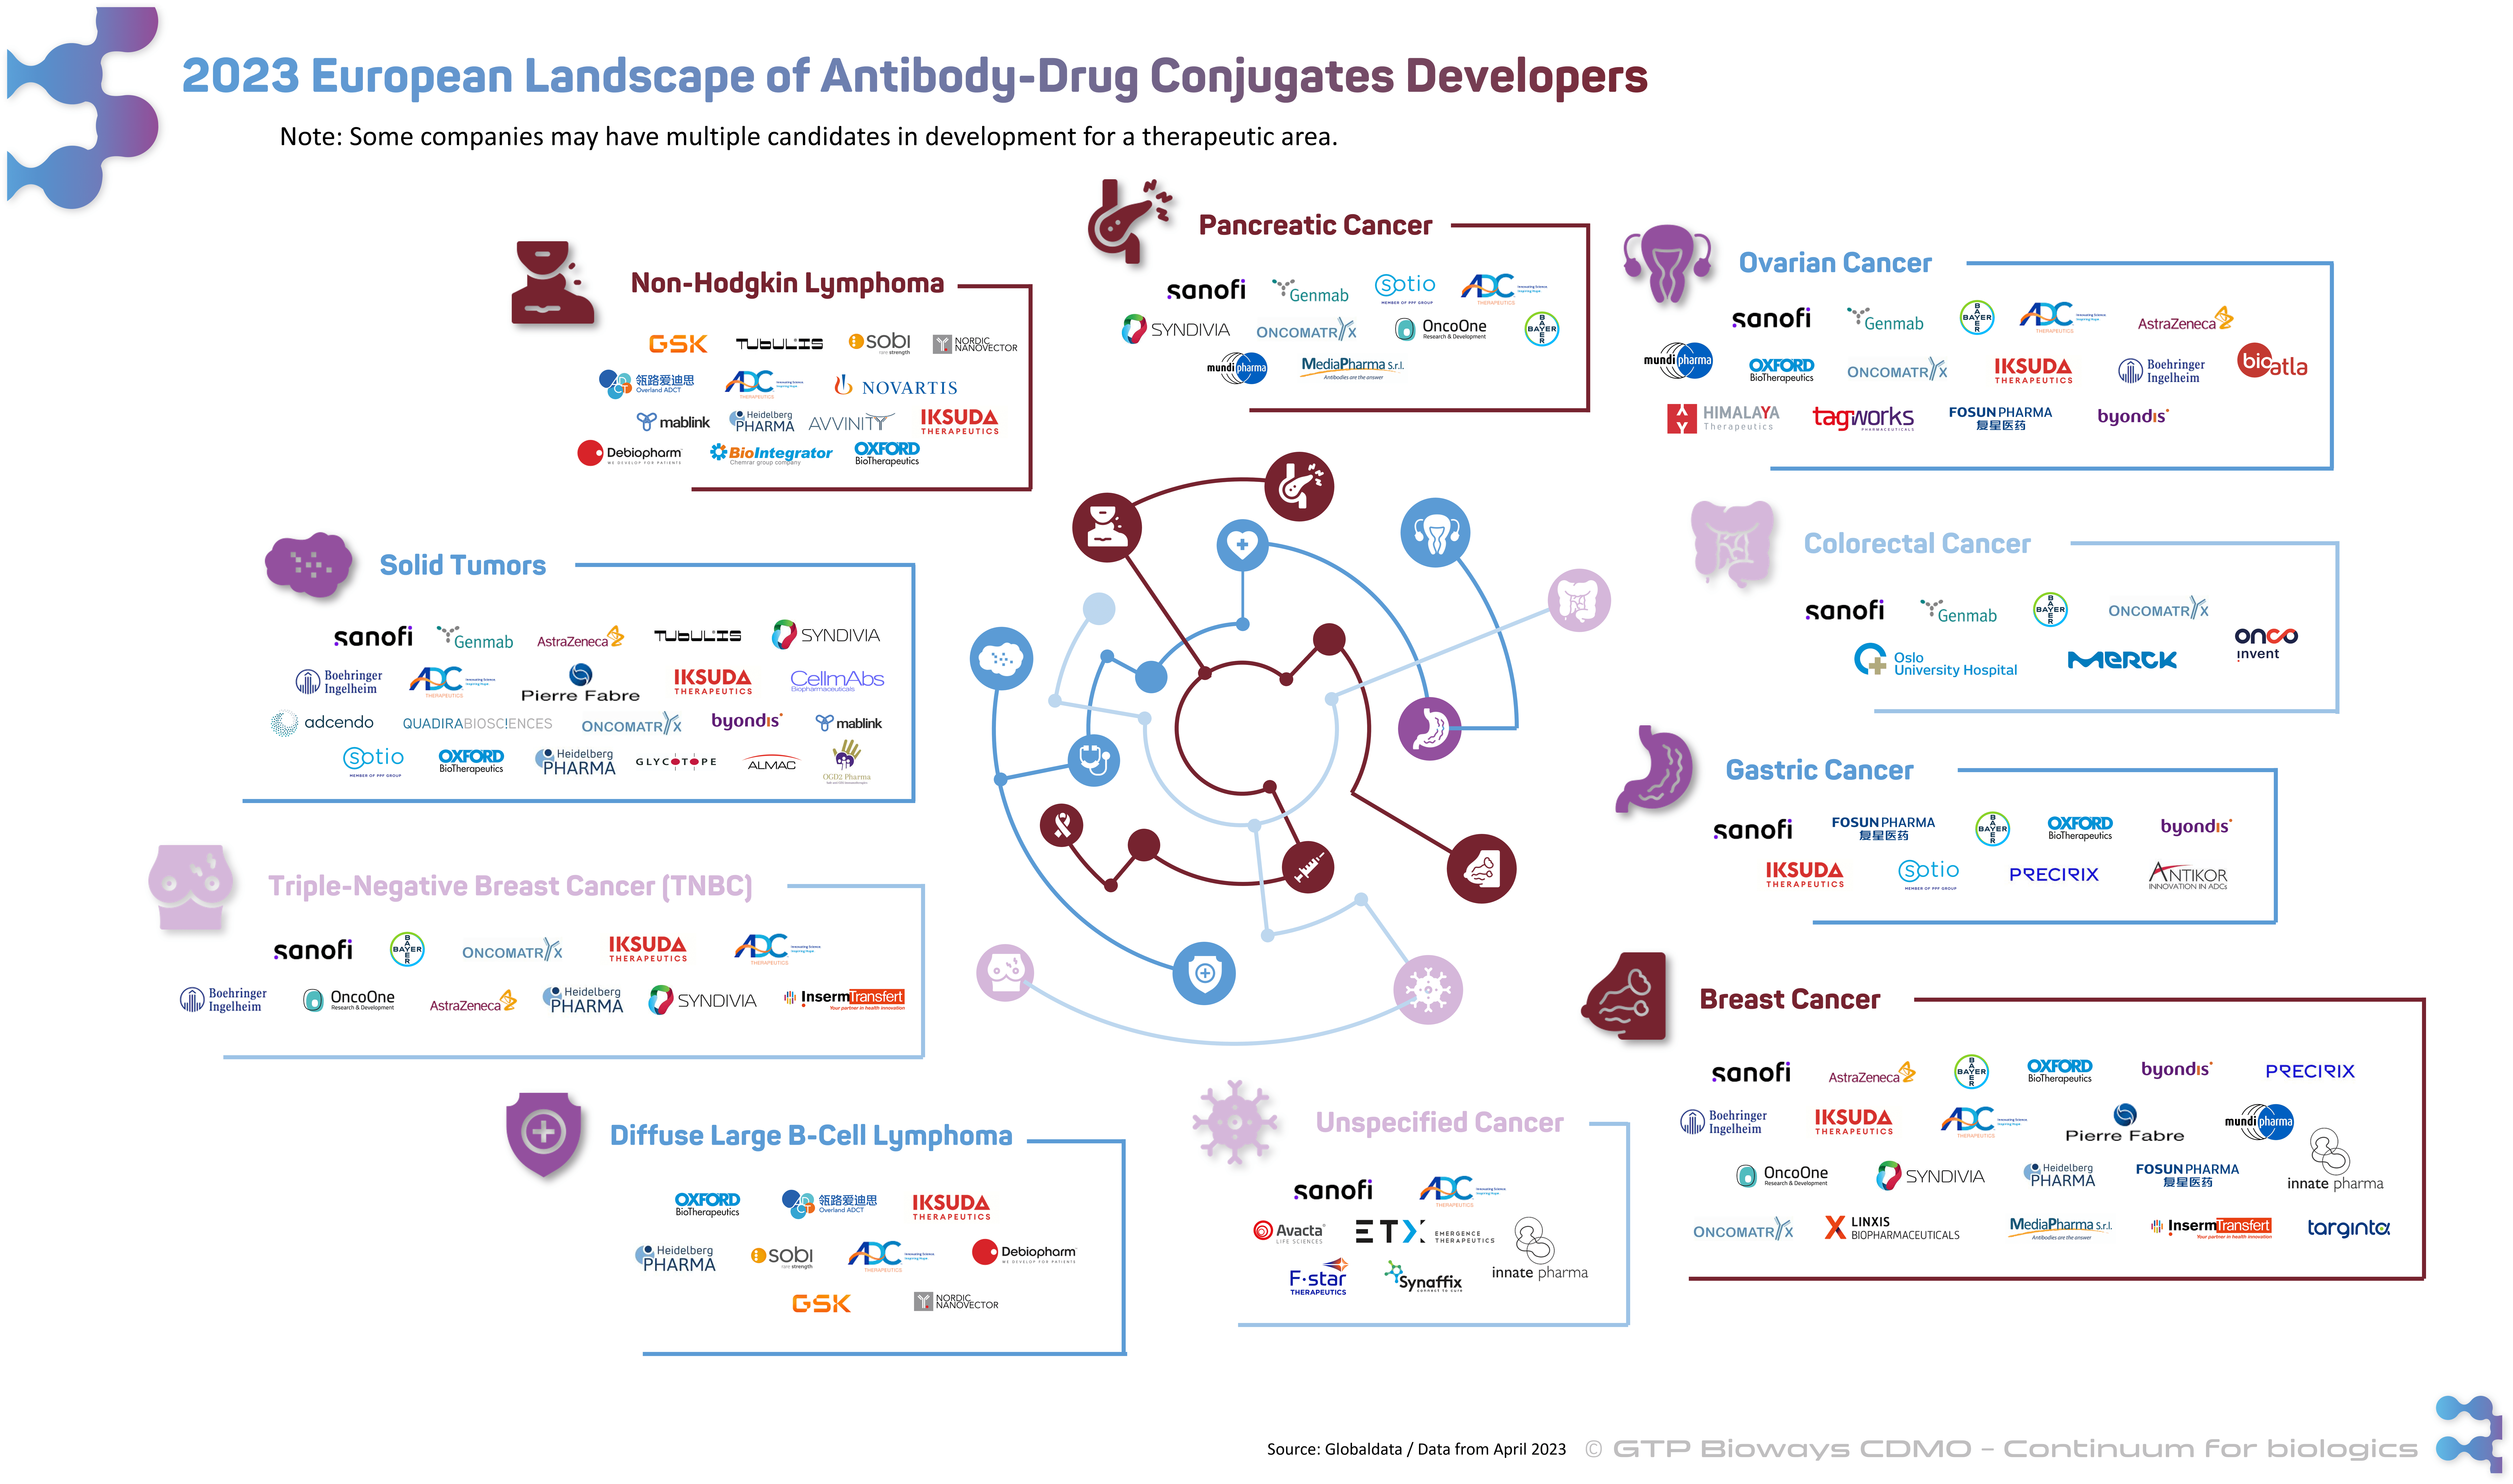 Biologics CDMO - Bioconjugates & Antibody Drug Conjugates (ADC) Developers Landscape Europe 2023 - Cancer therapy